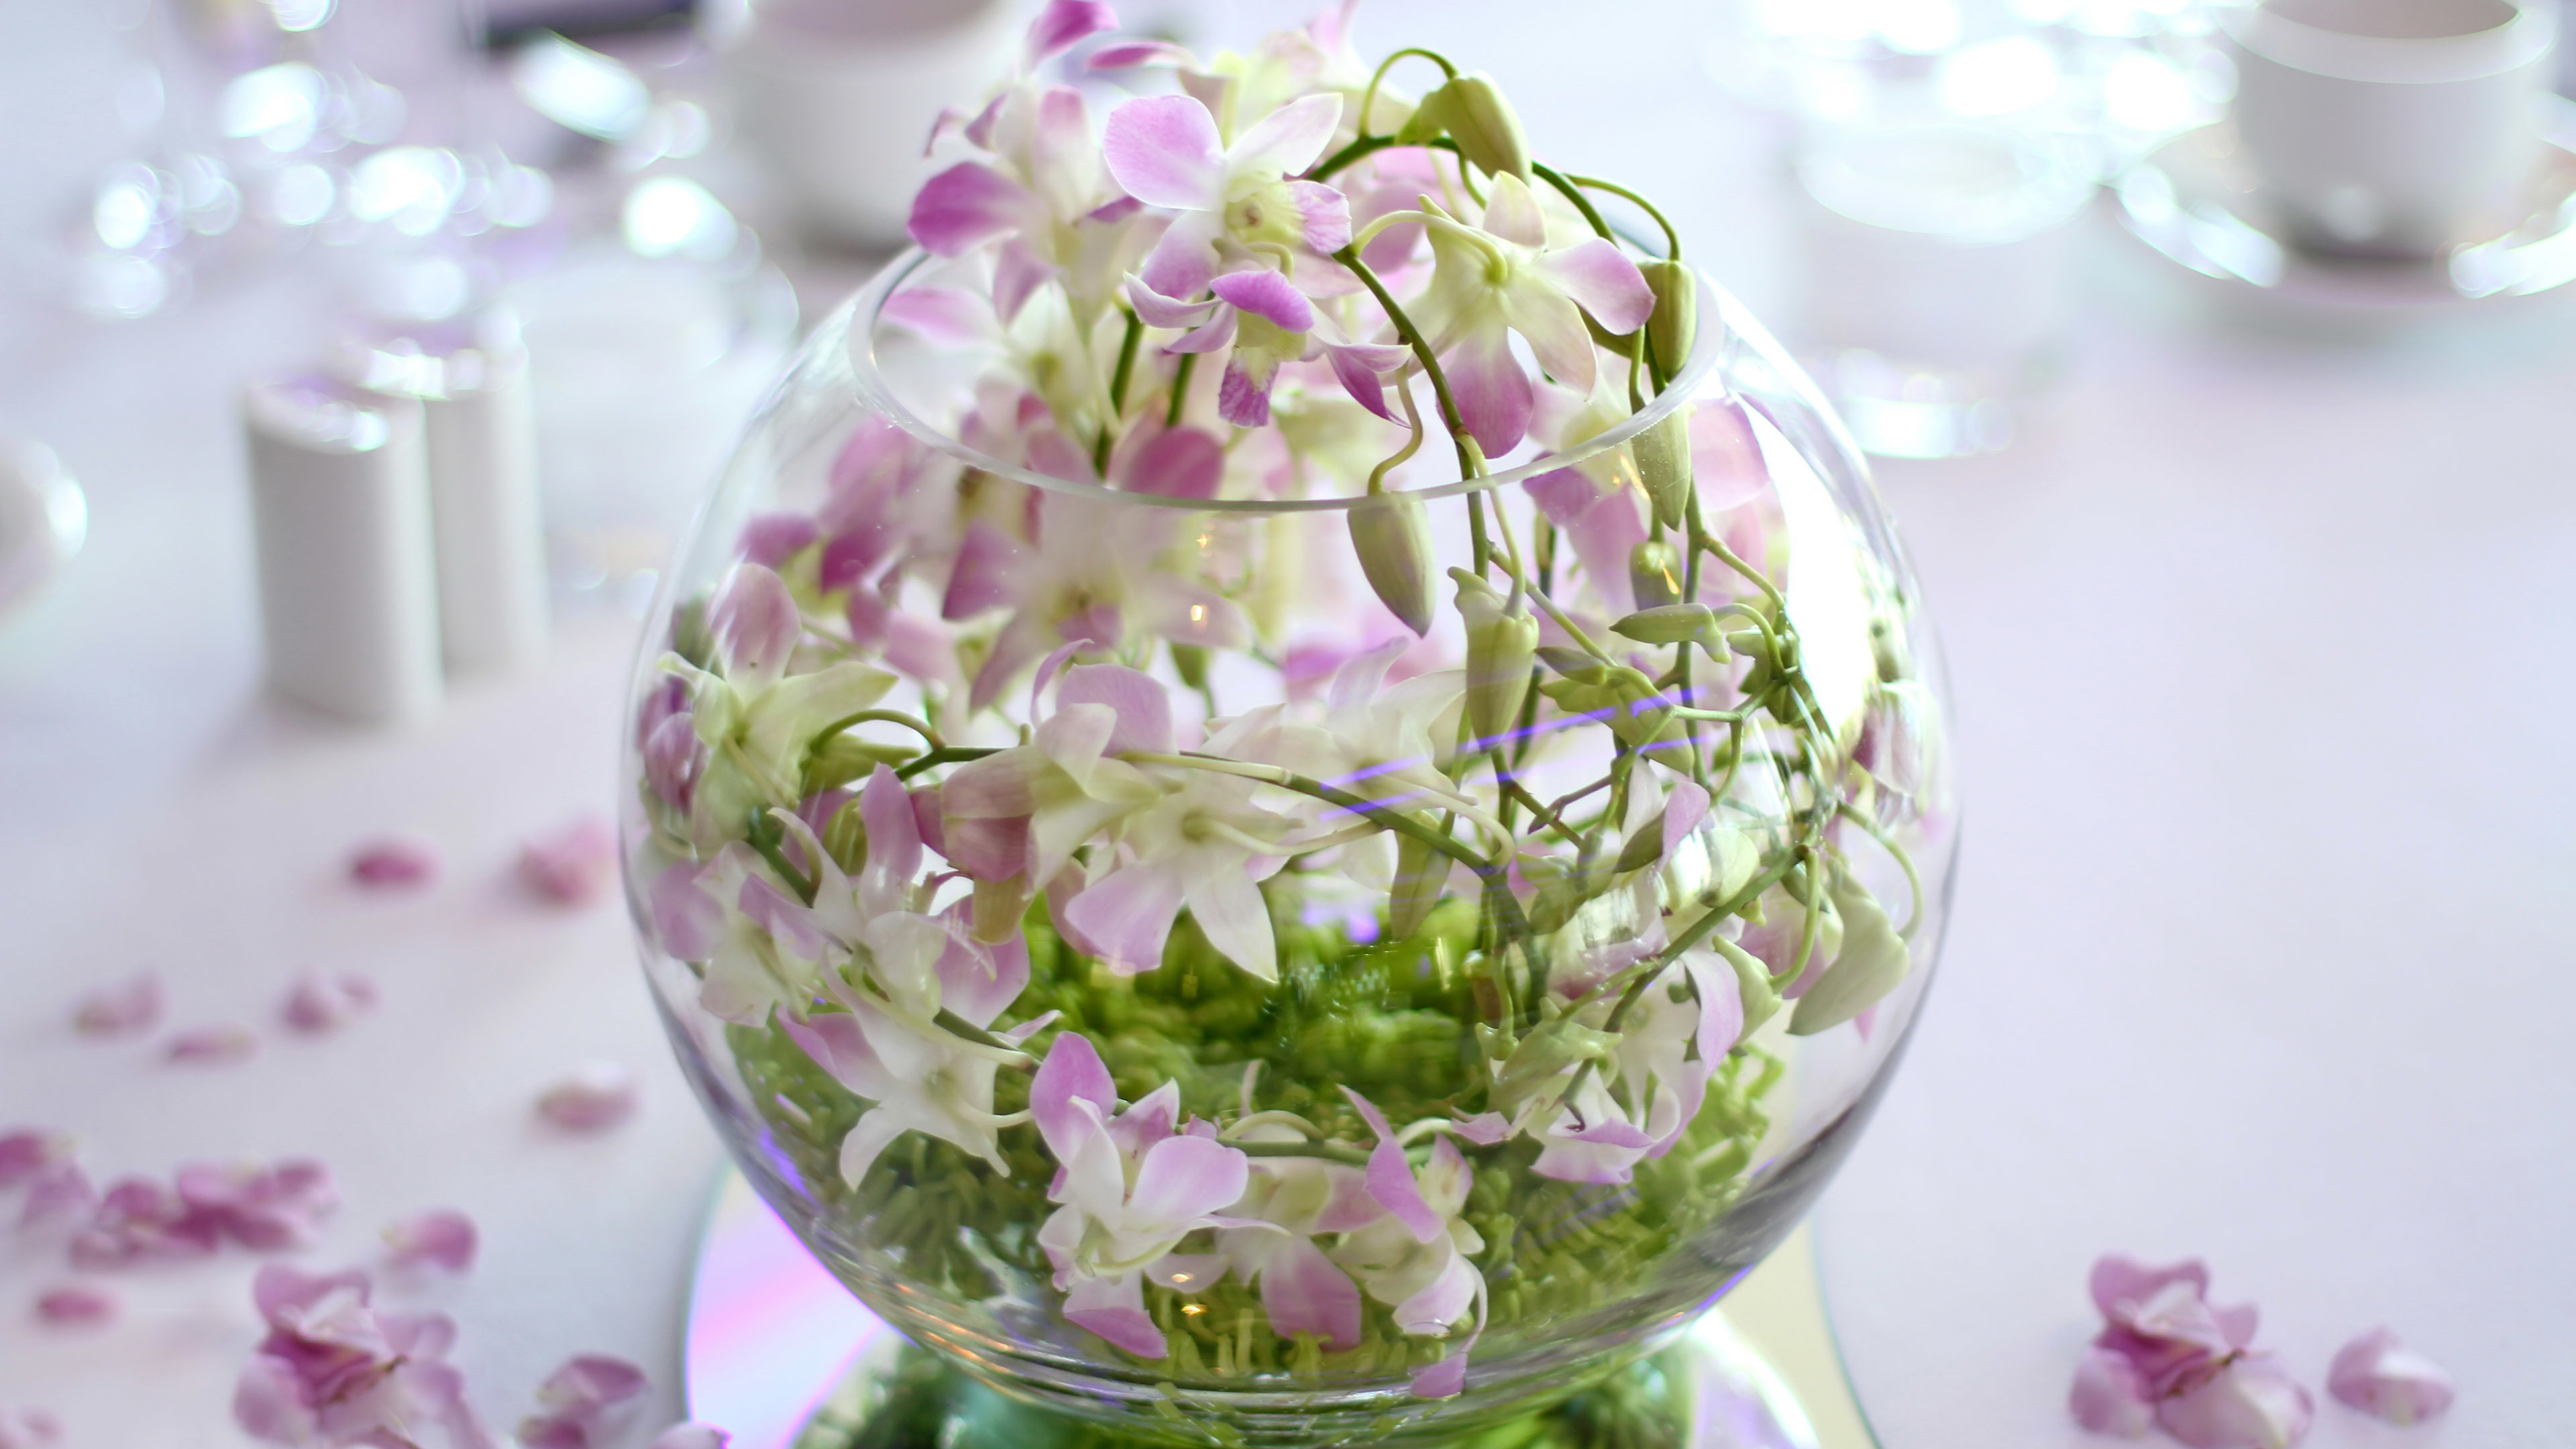 flowers in a glass bowl flower hd wallpaper 3840x2160 32485 Домострой